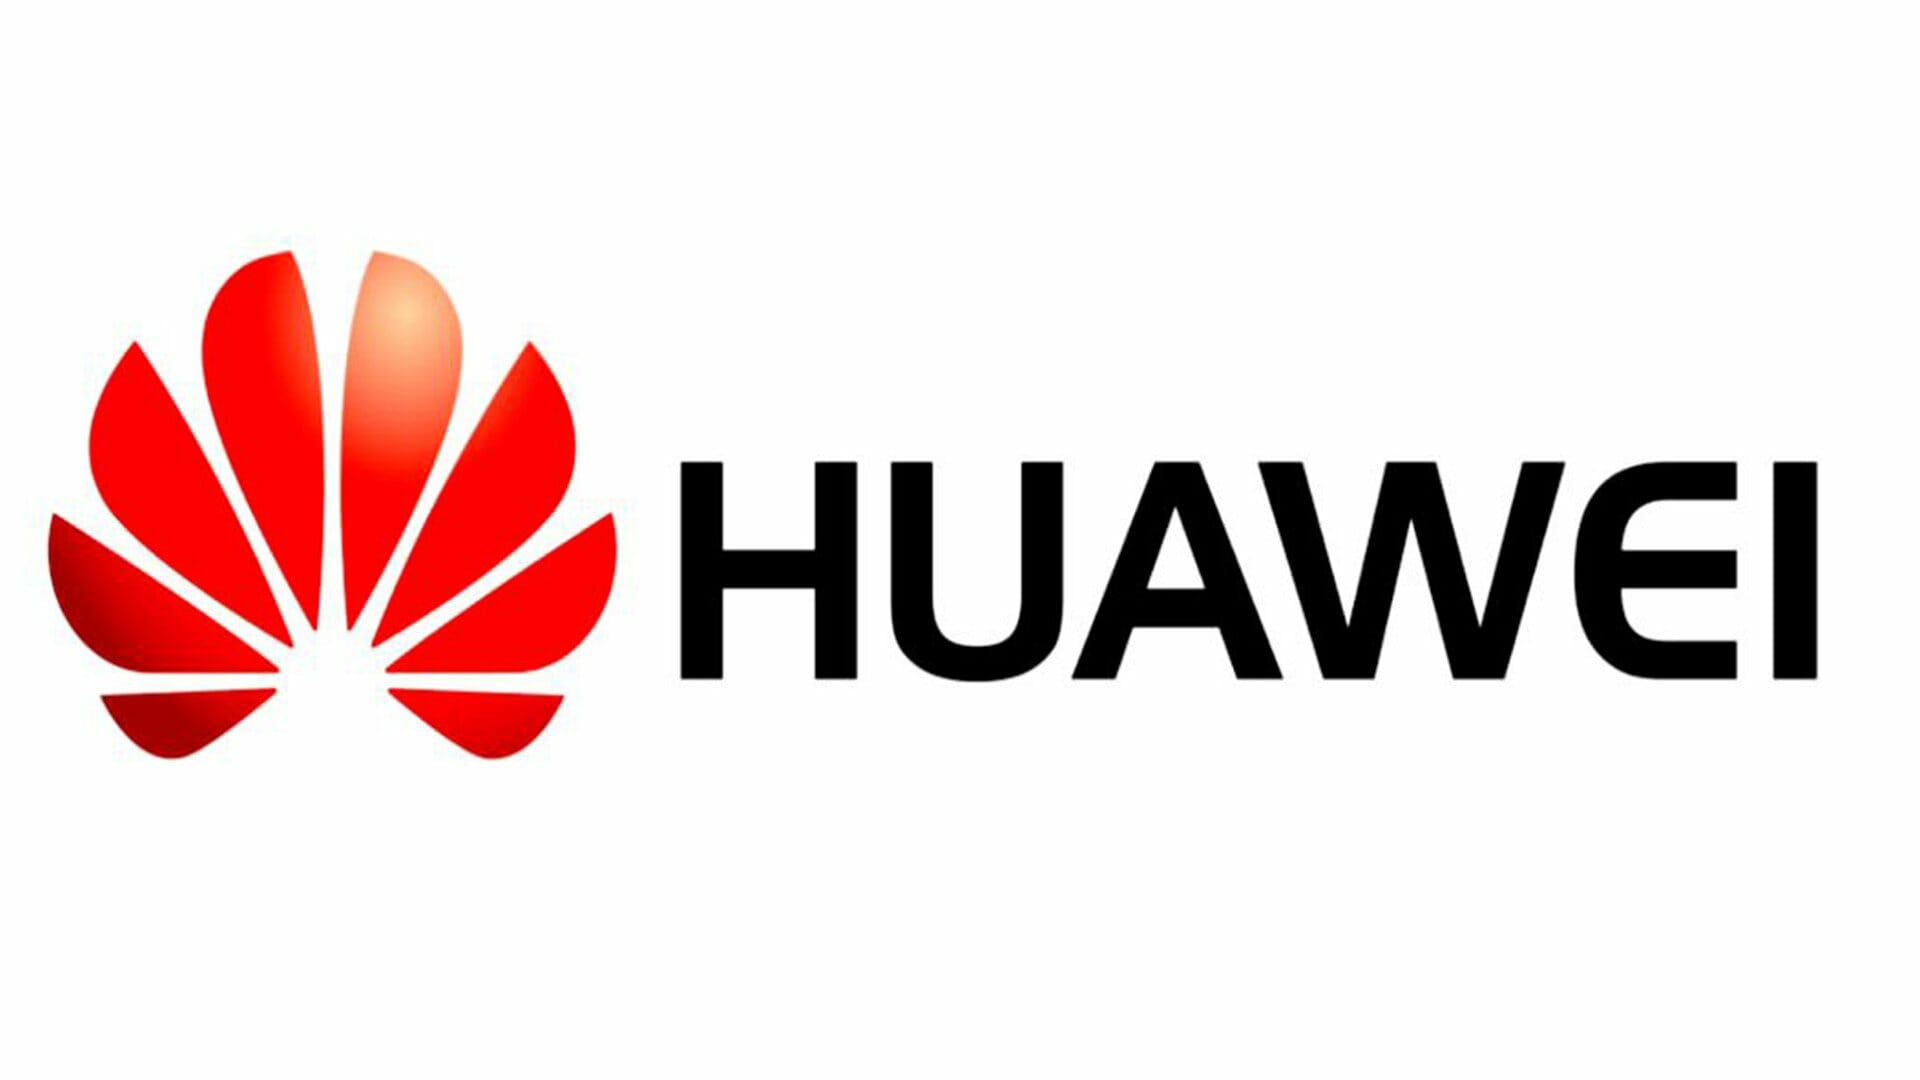 Huawei emblem 1